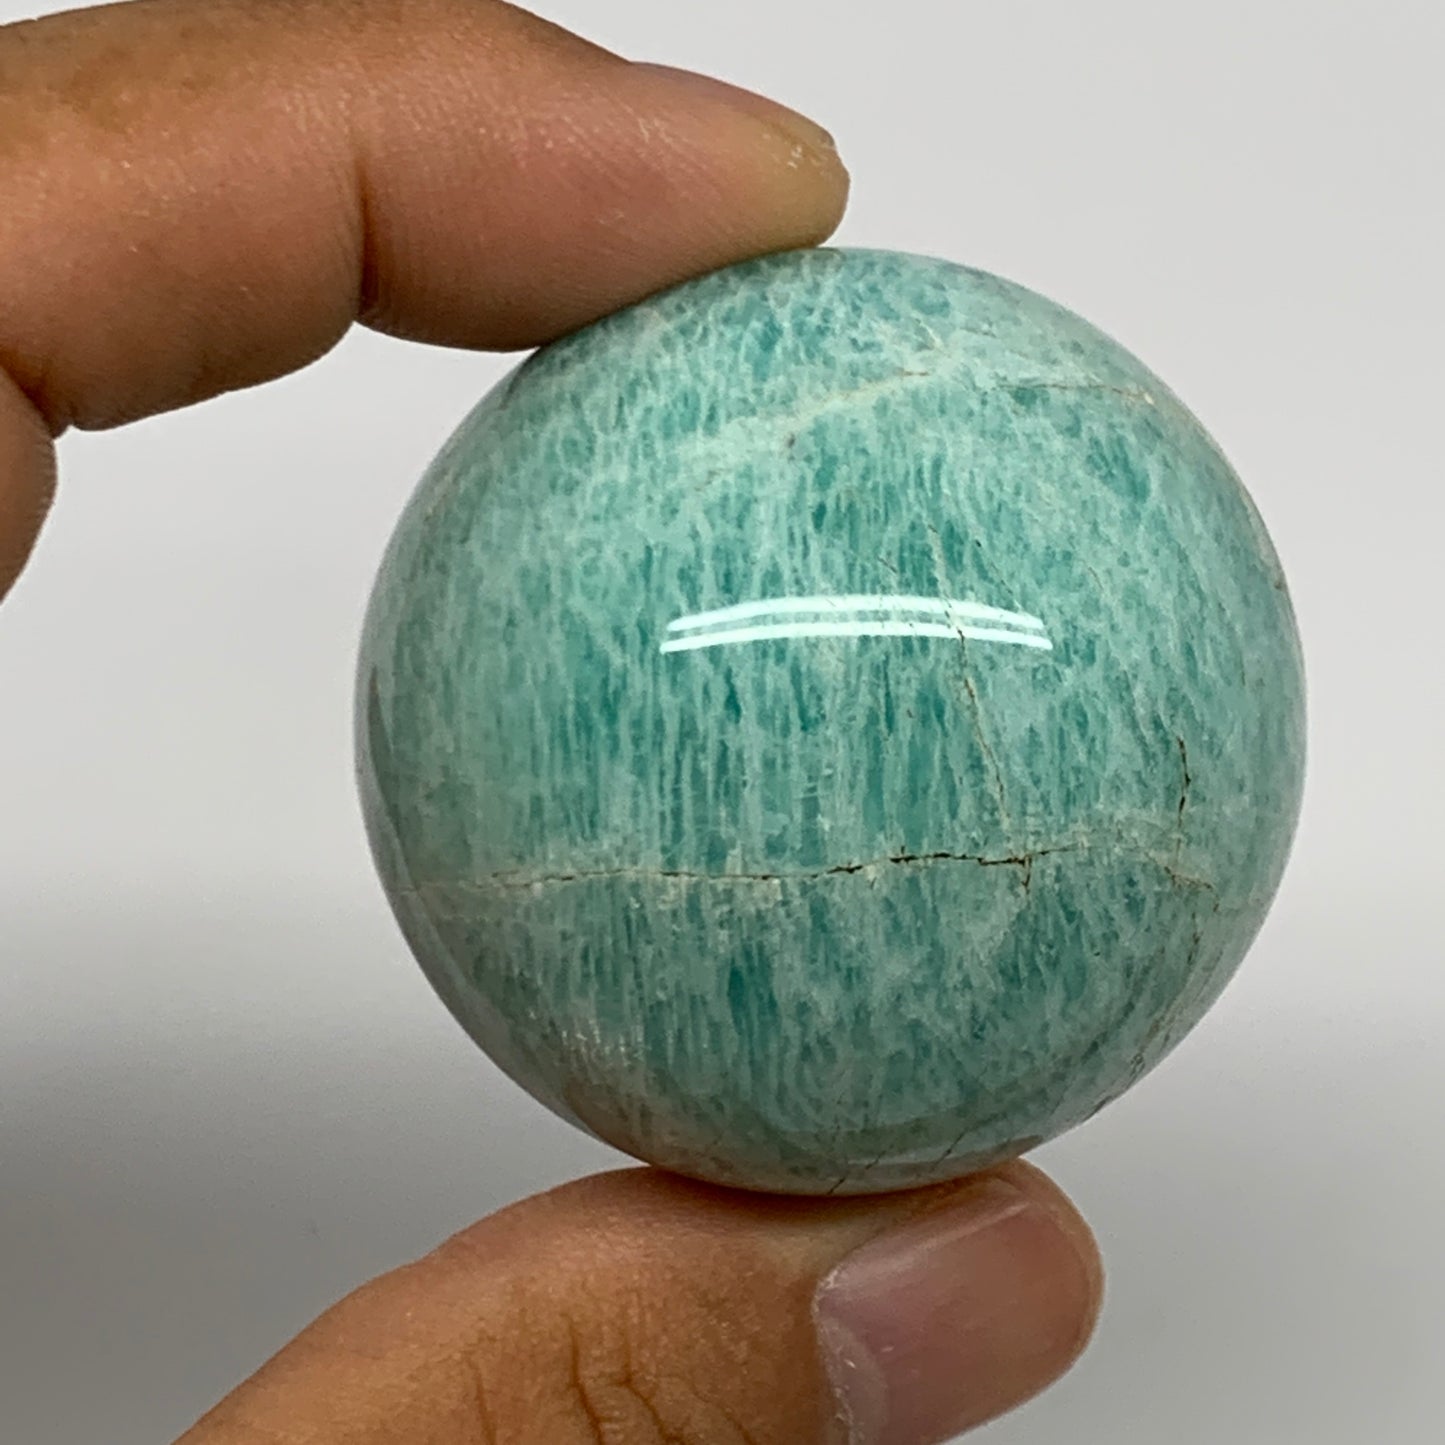 94.1g, 1.6" Small Amazonite Sphere Ball Gemstone from Madagascar, B15826